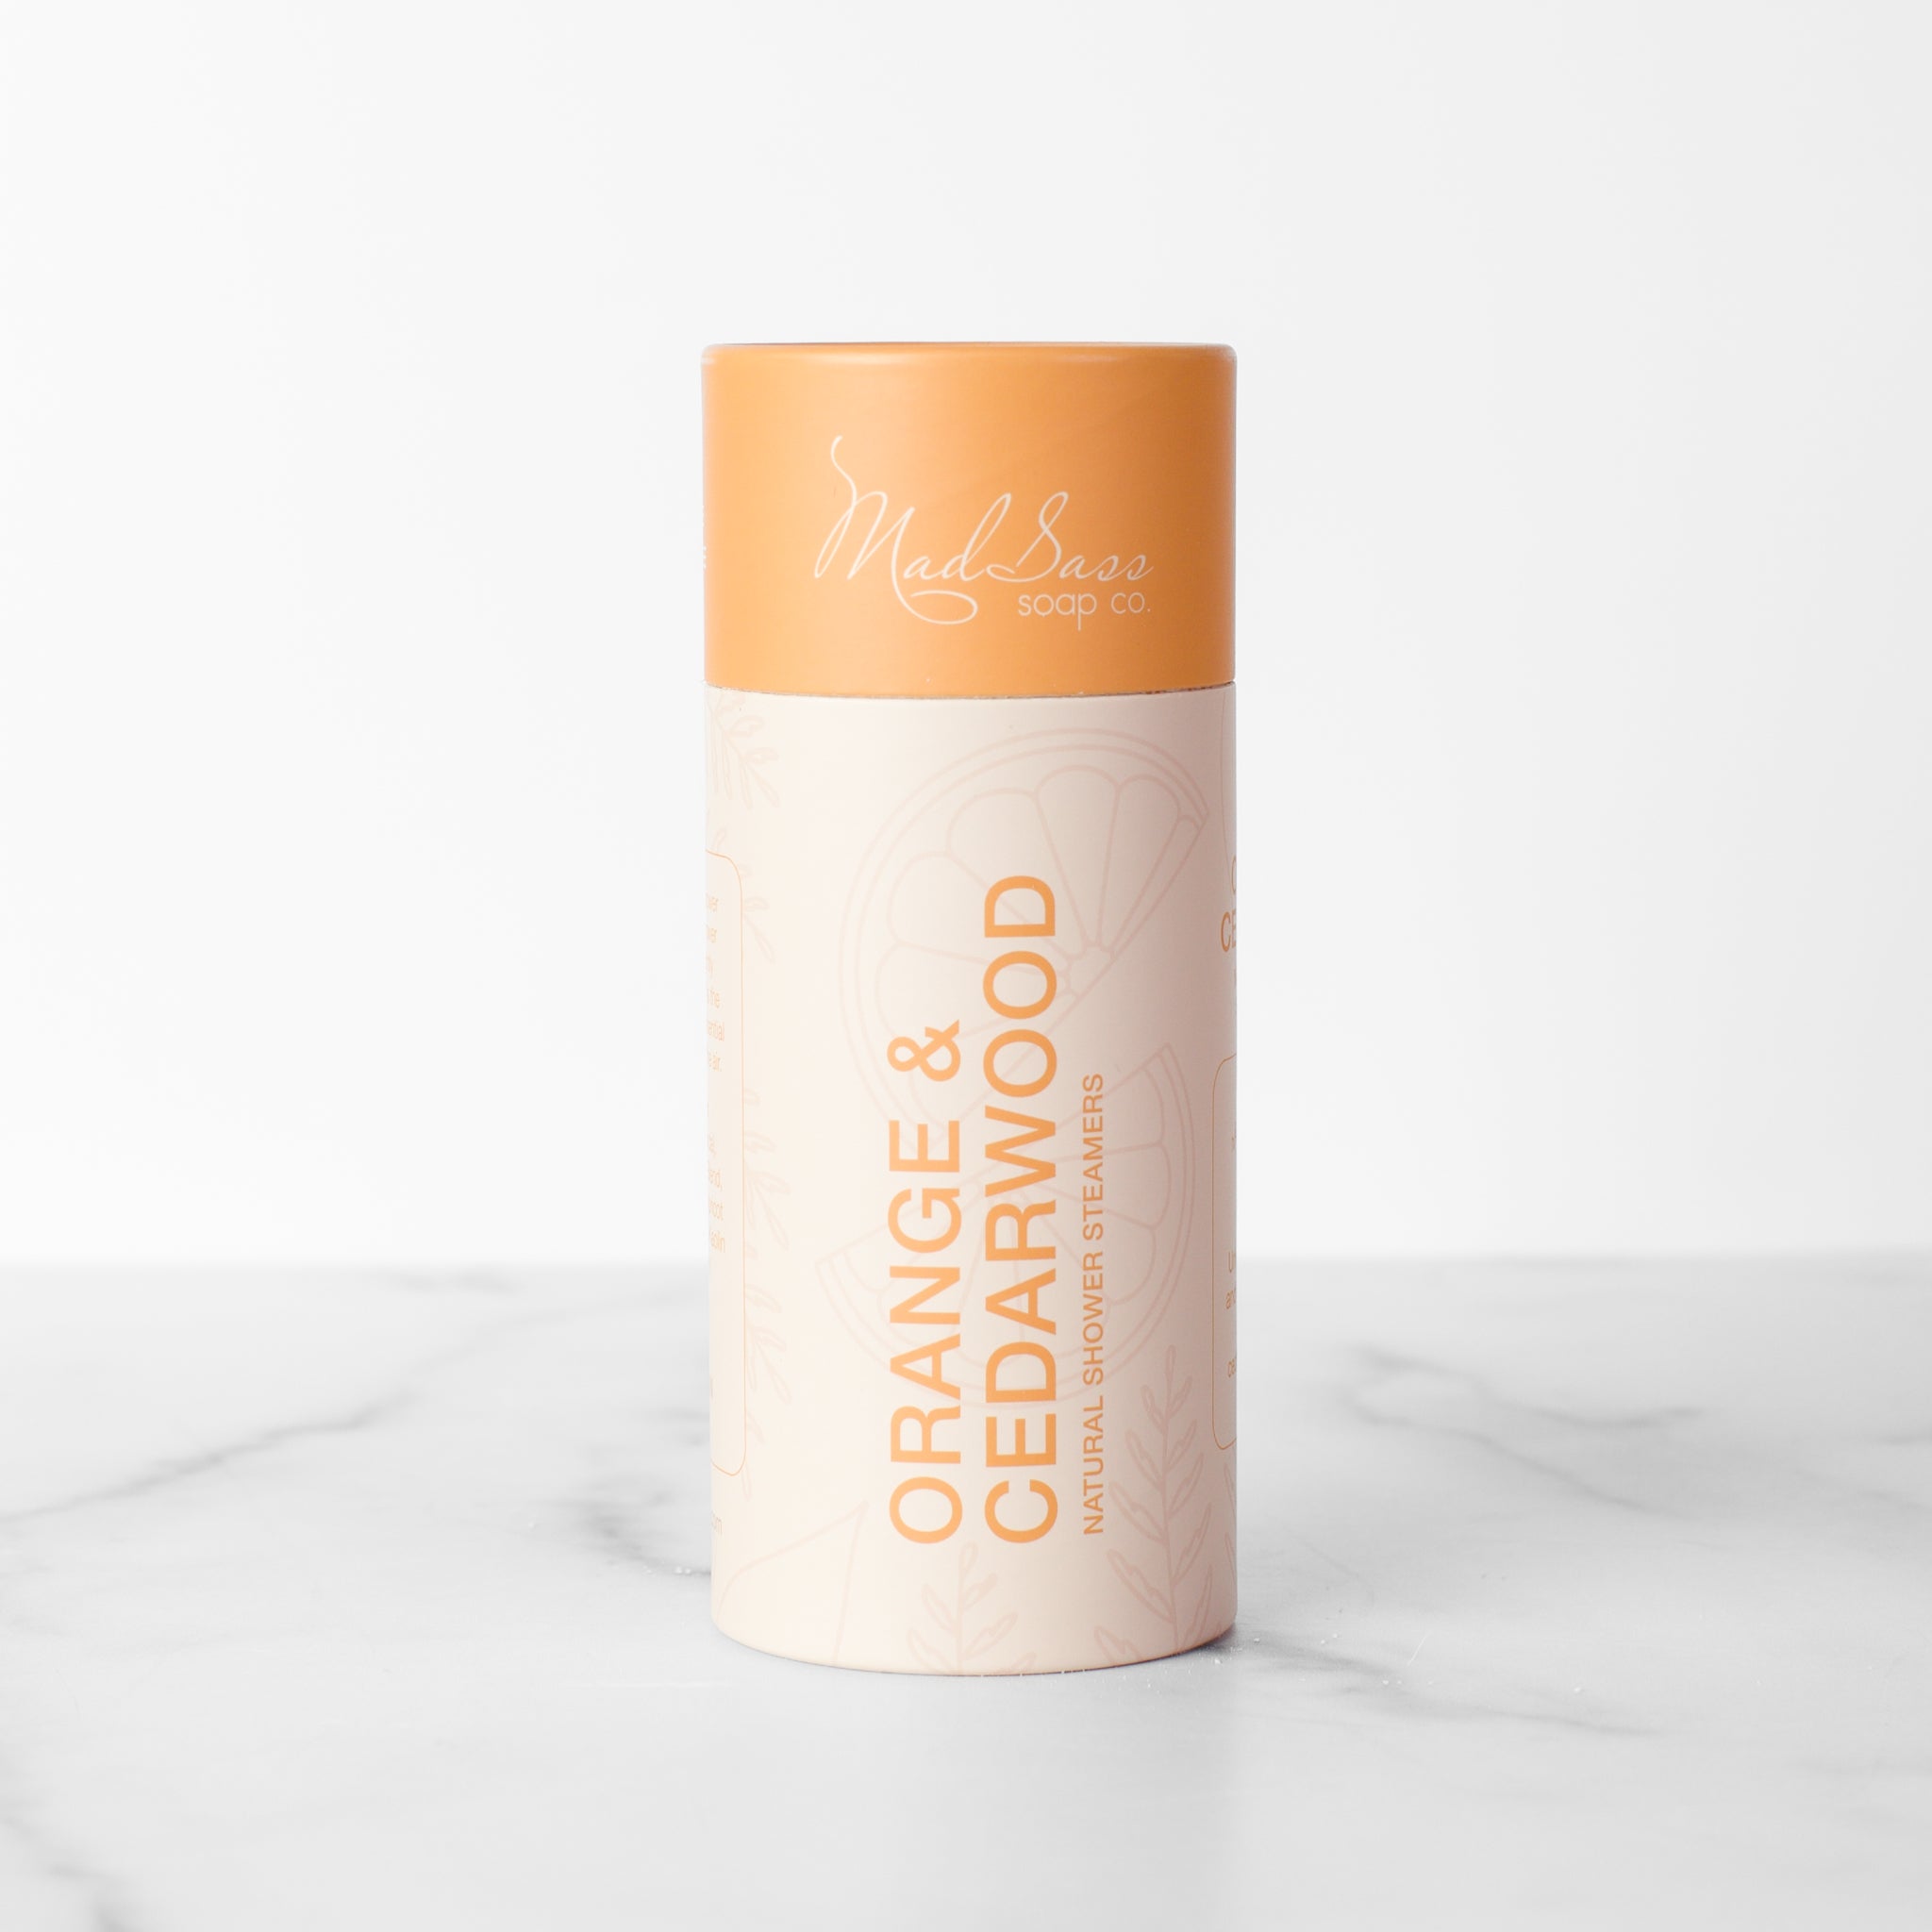 Orange & Cedarwood (Pack of 5) - Shower Steamers